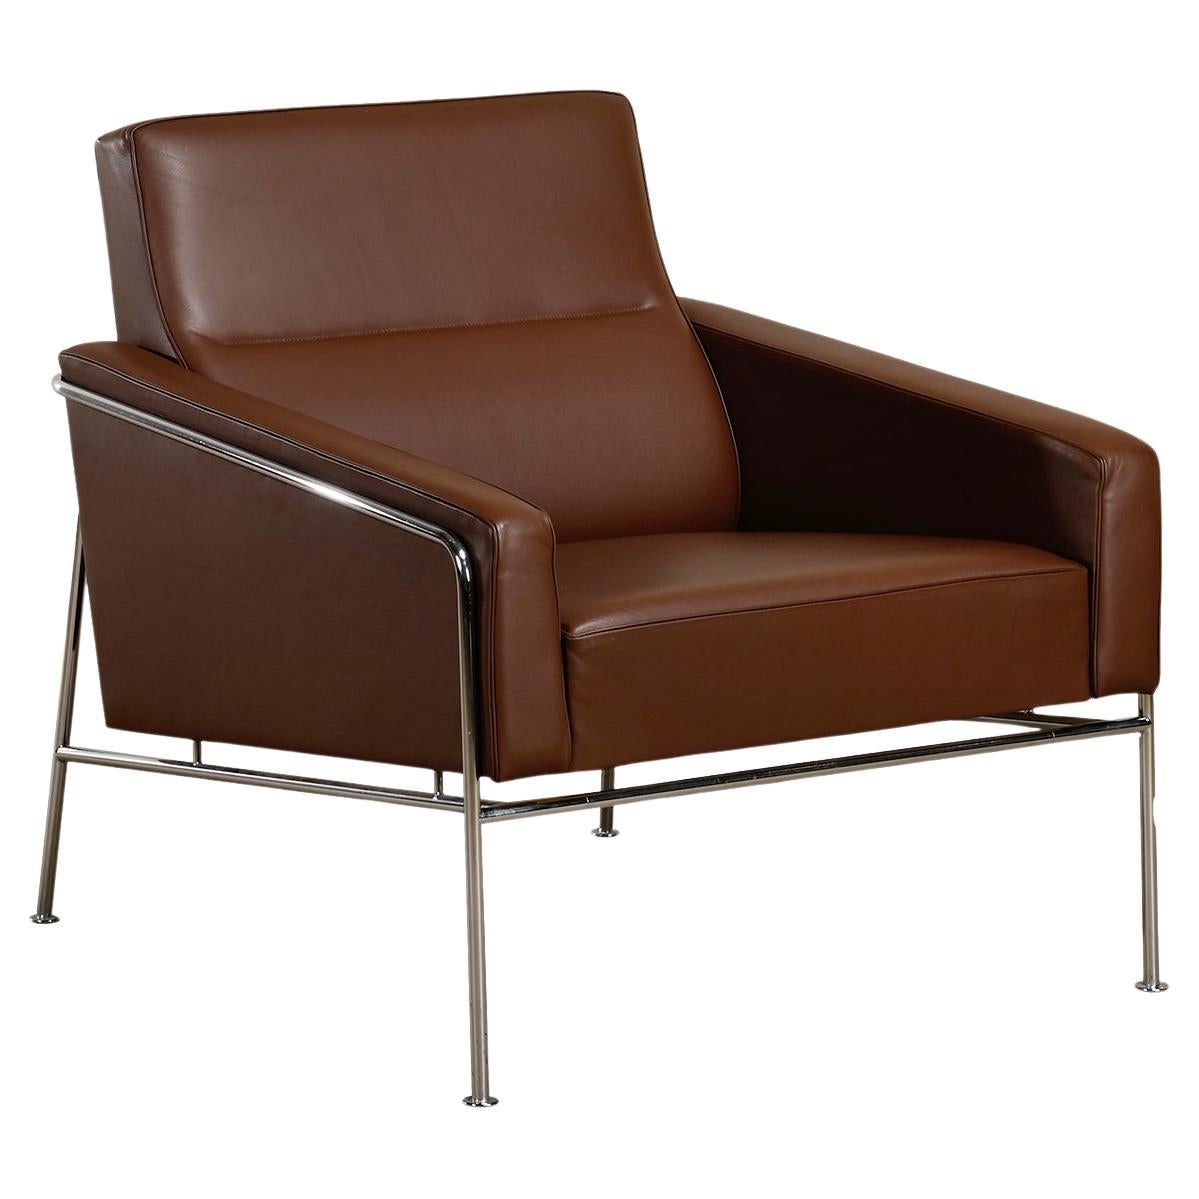 Arne Jacobsen Lounge Chair 3300 Series in Chestnut leather for Fritz Hansen For Sale